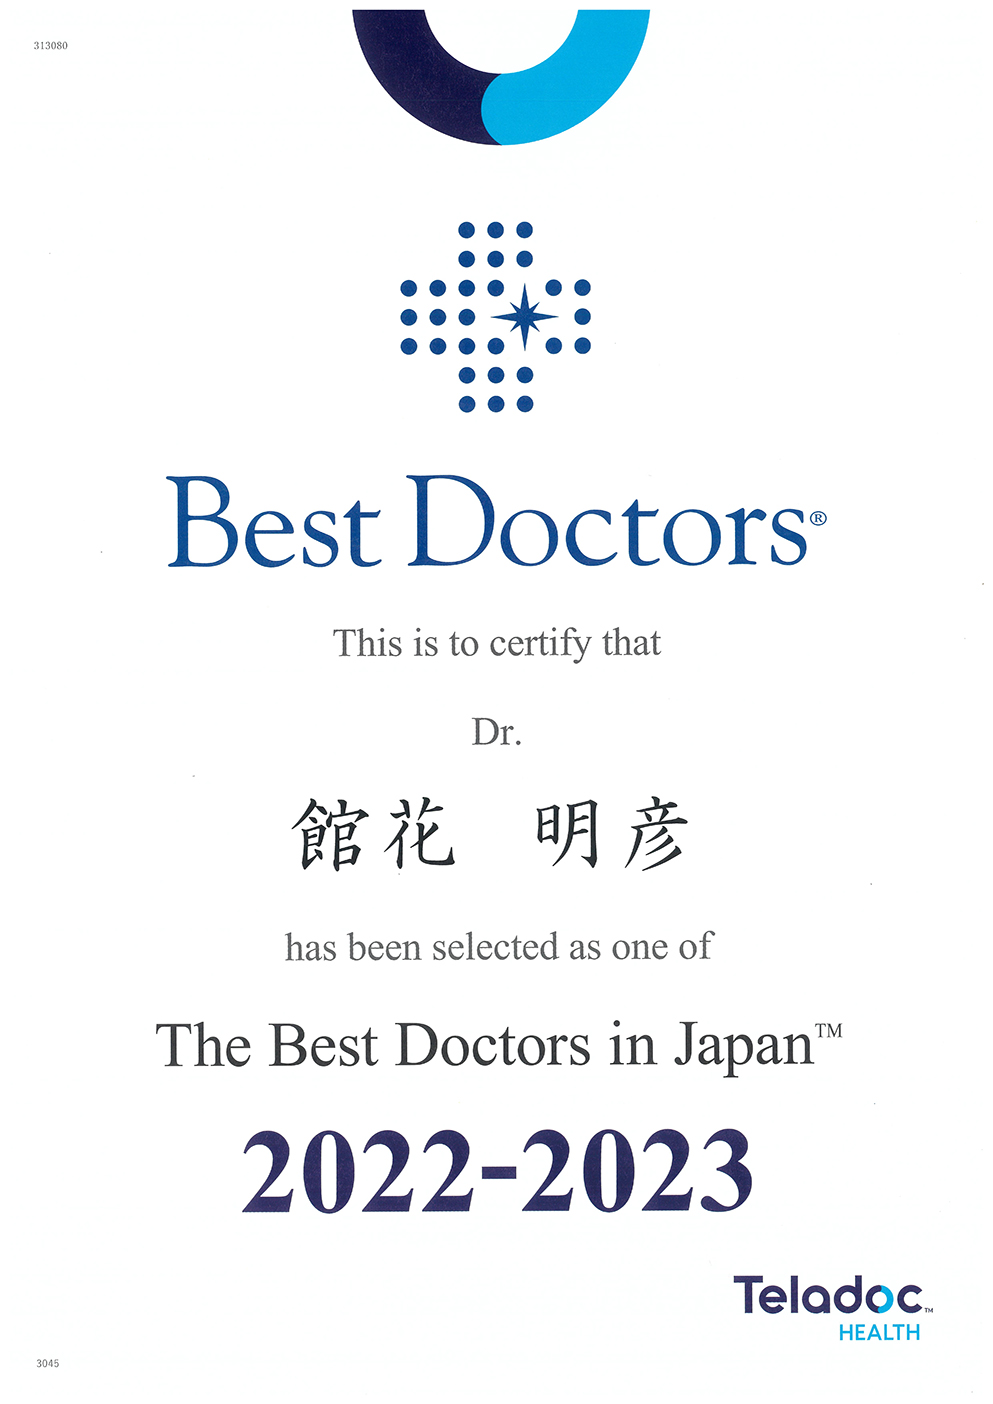 The Best Doctors in Japan